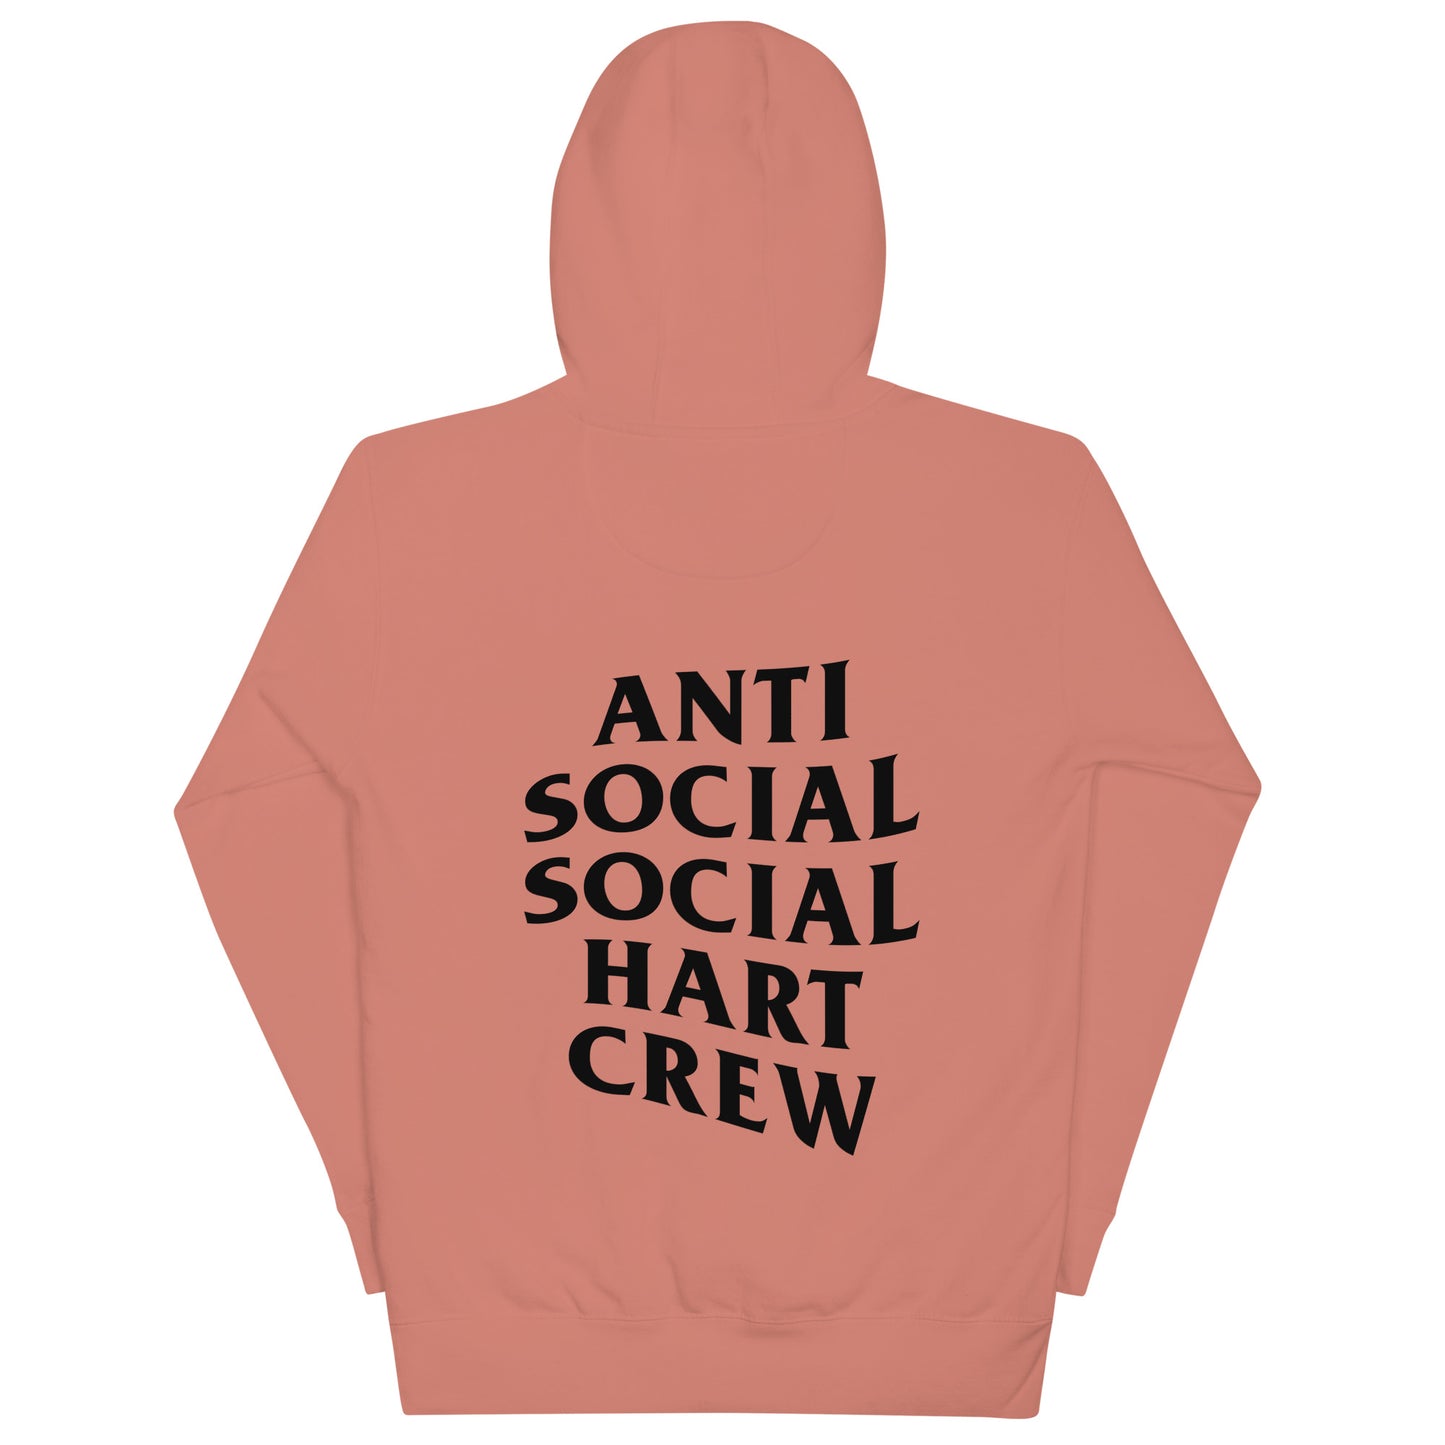 Anti Social HC - Limited Edition Unisex Hoodie